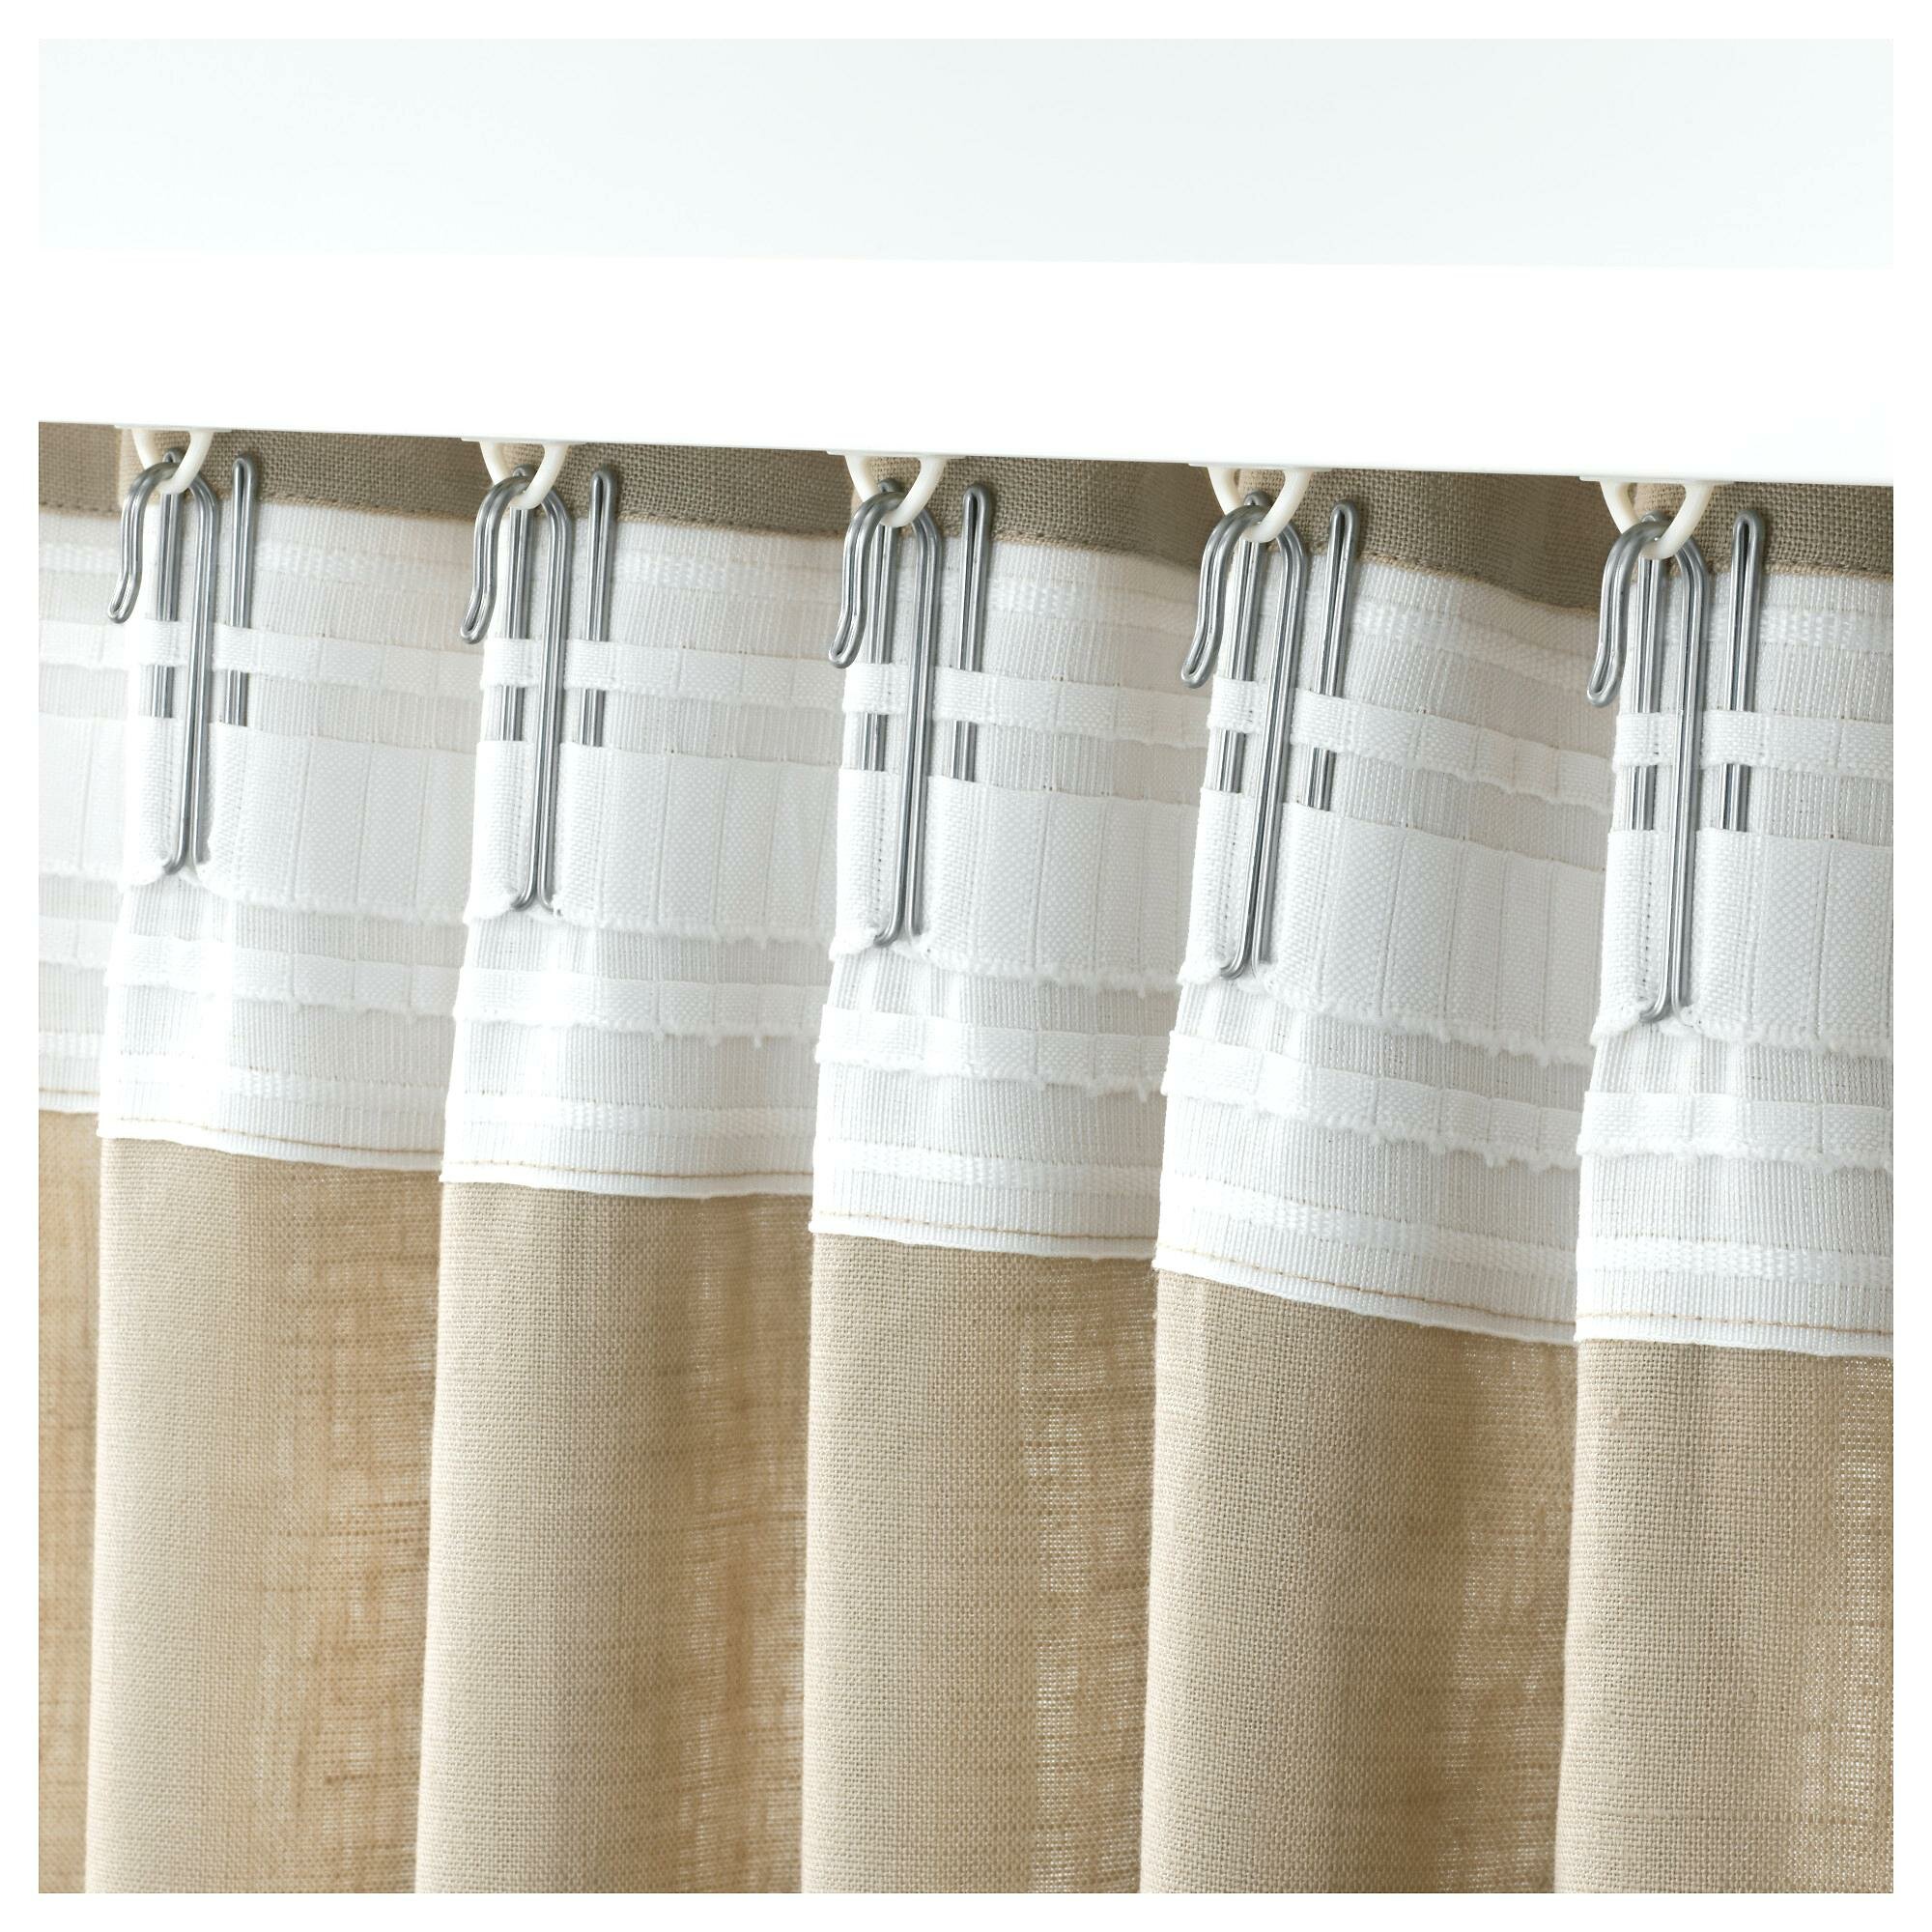 Ikea Shower Curtain for Best Your Bathroom Decoration: Ikea Shower Curtain | Shower Curtain Measurements | Octopus Shower Curtain Ikea